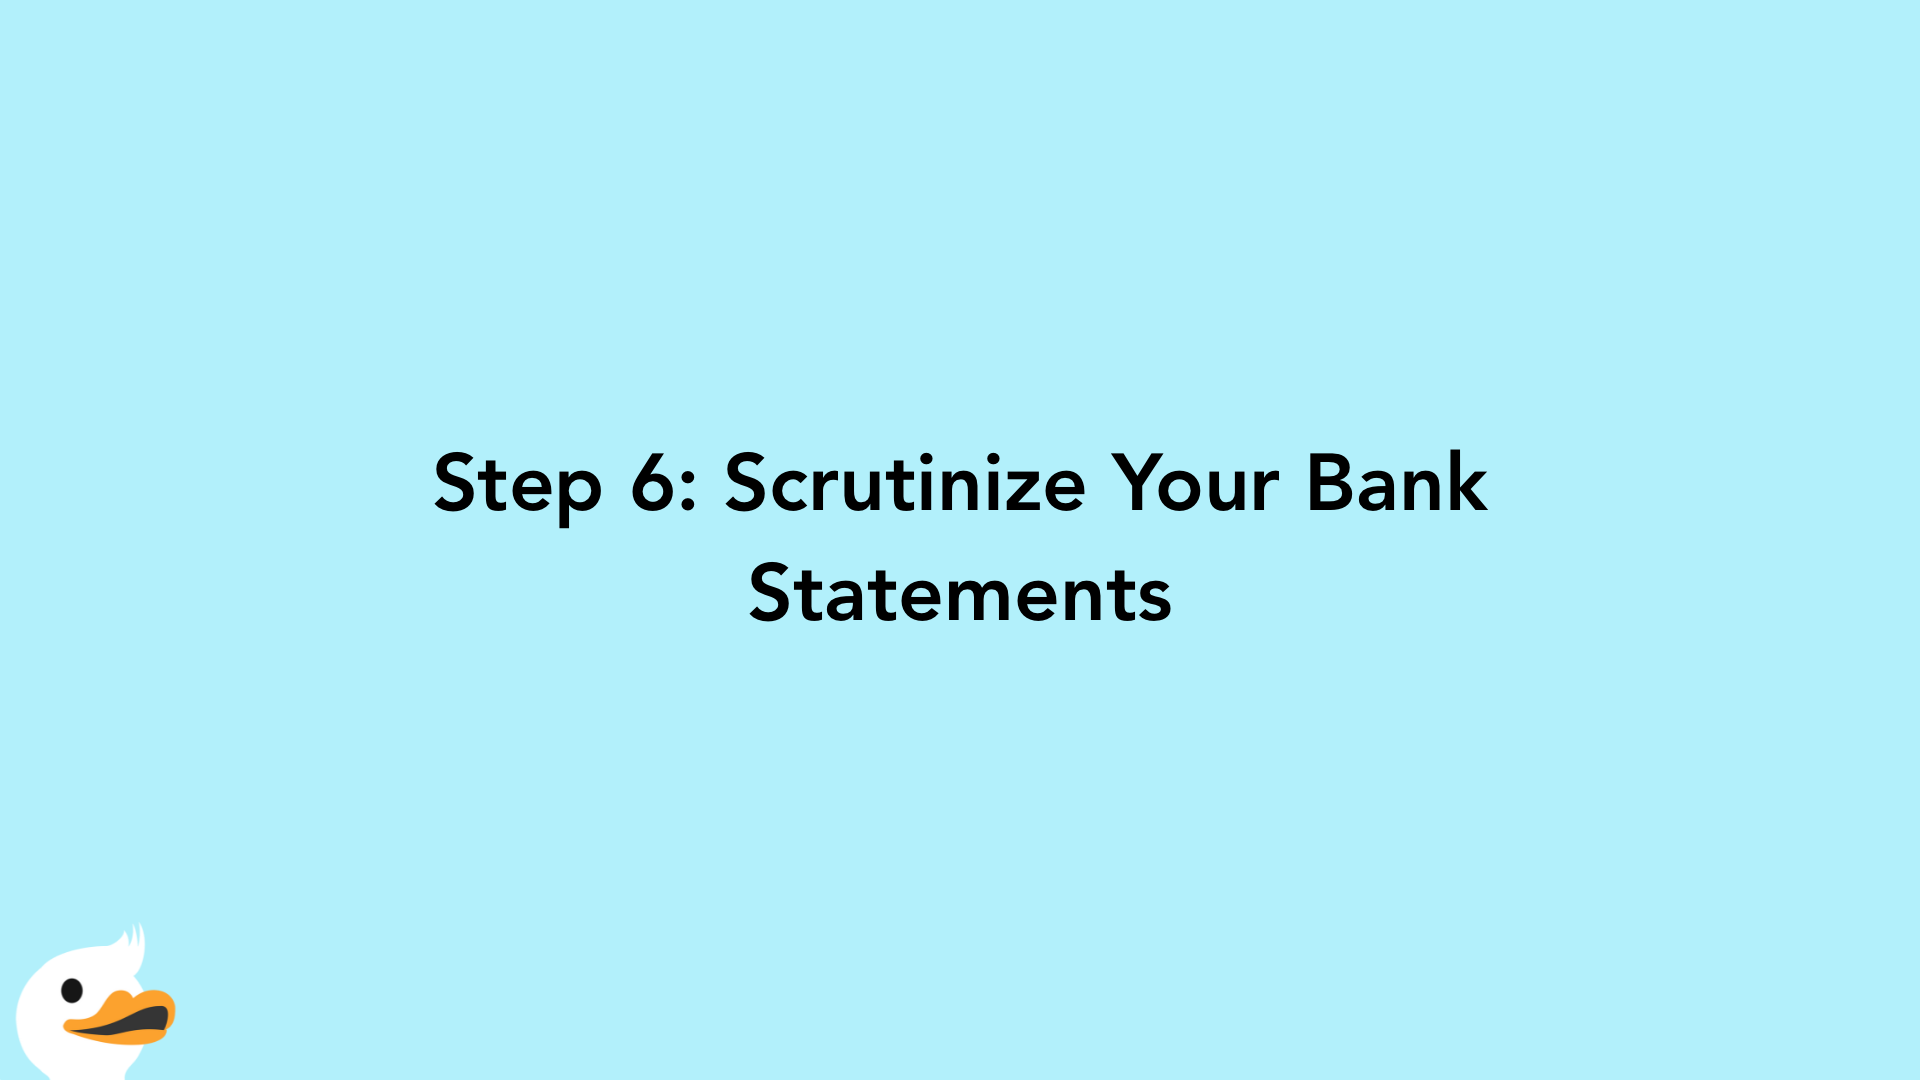 Step 6: Scrutinize Your Bank Statements